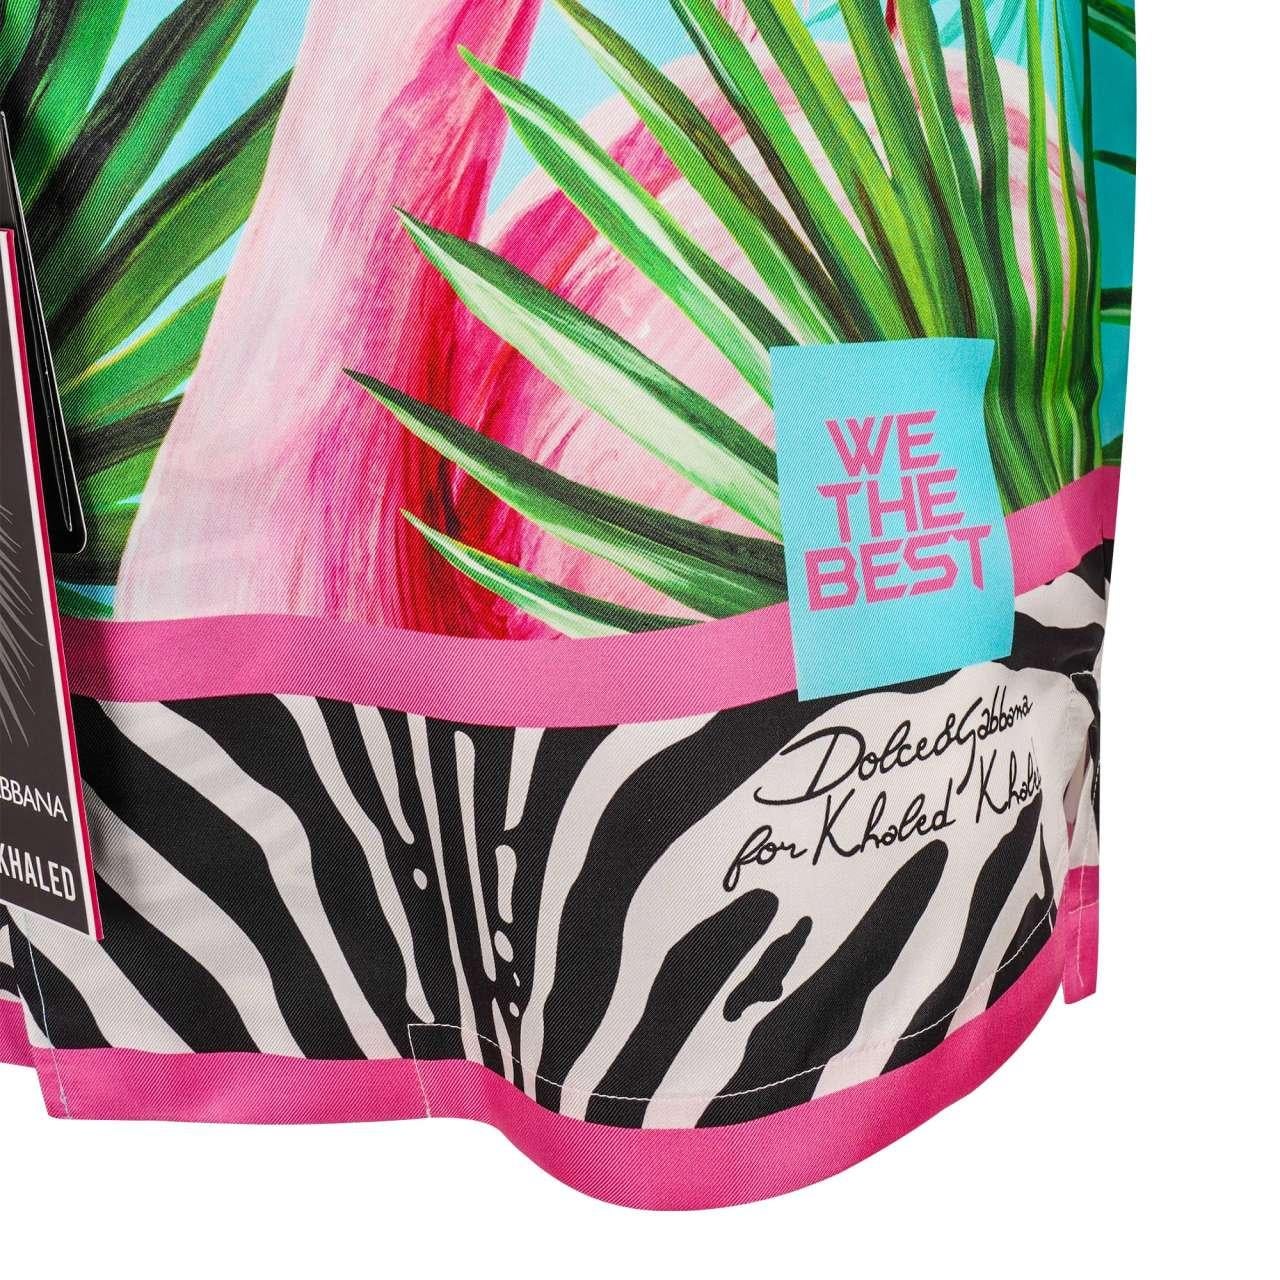 Women's D&G - DJ Khaled Silk Flamingo Zebra Shirt Blouse with Sunglasses and CD 38 For Sale